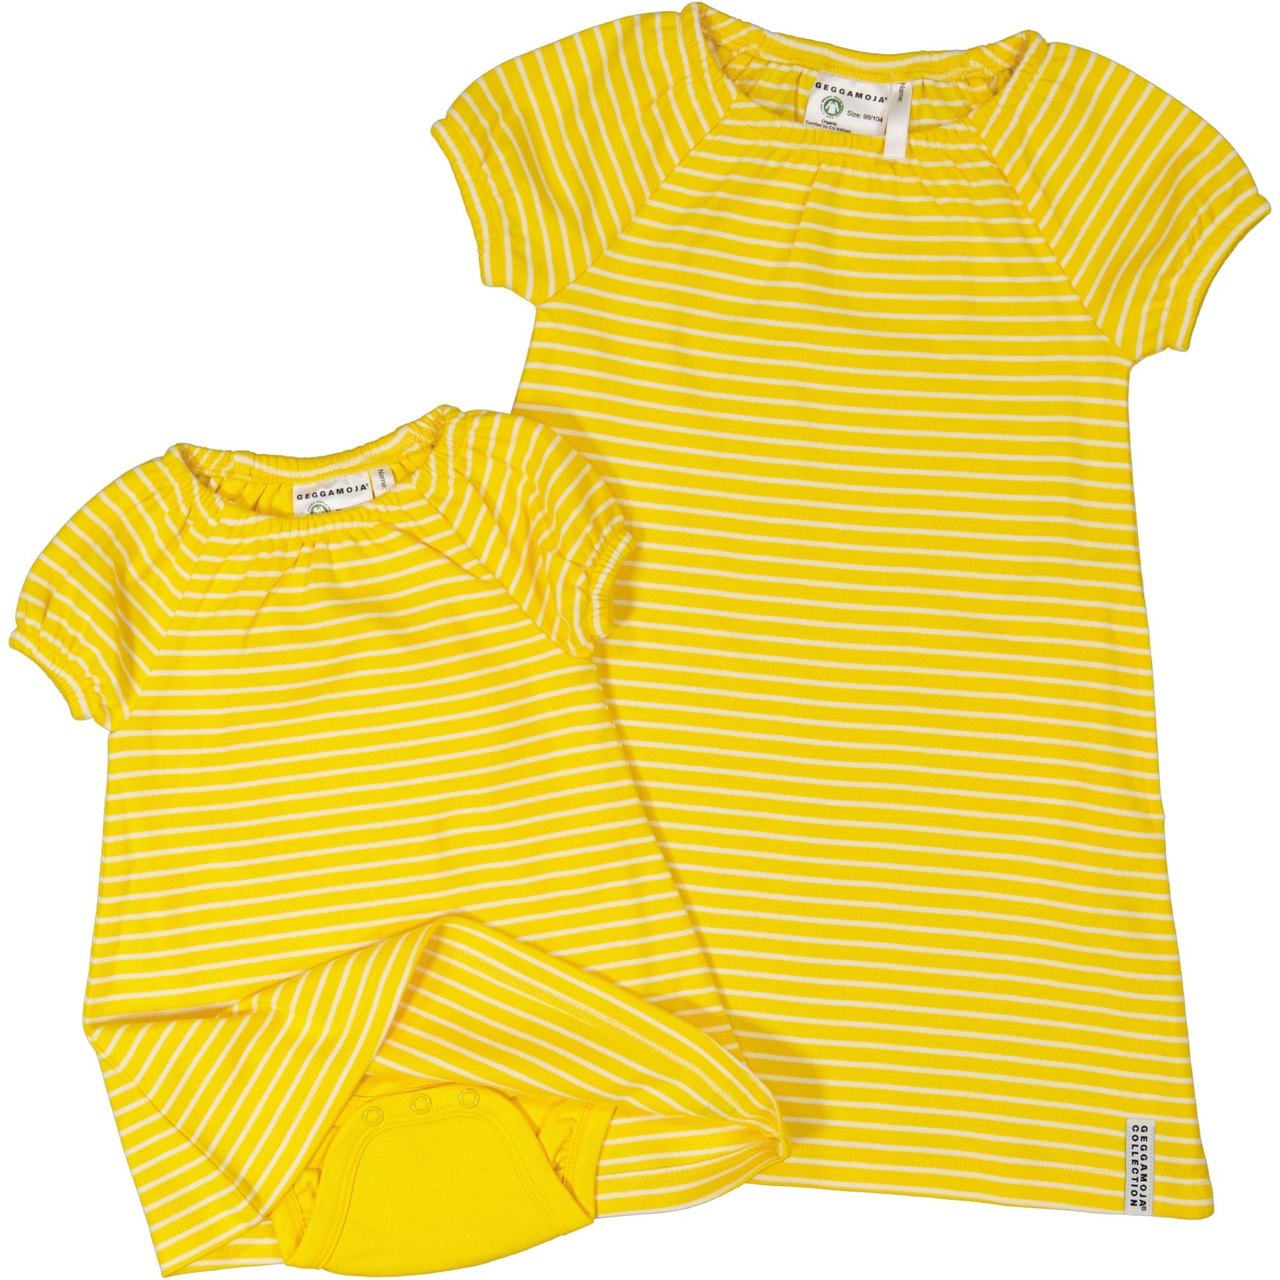 Singoalla dress Yellow/white  62/68